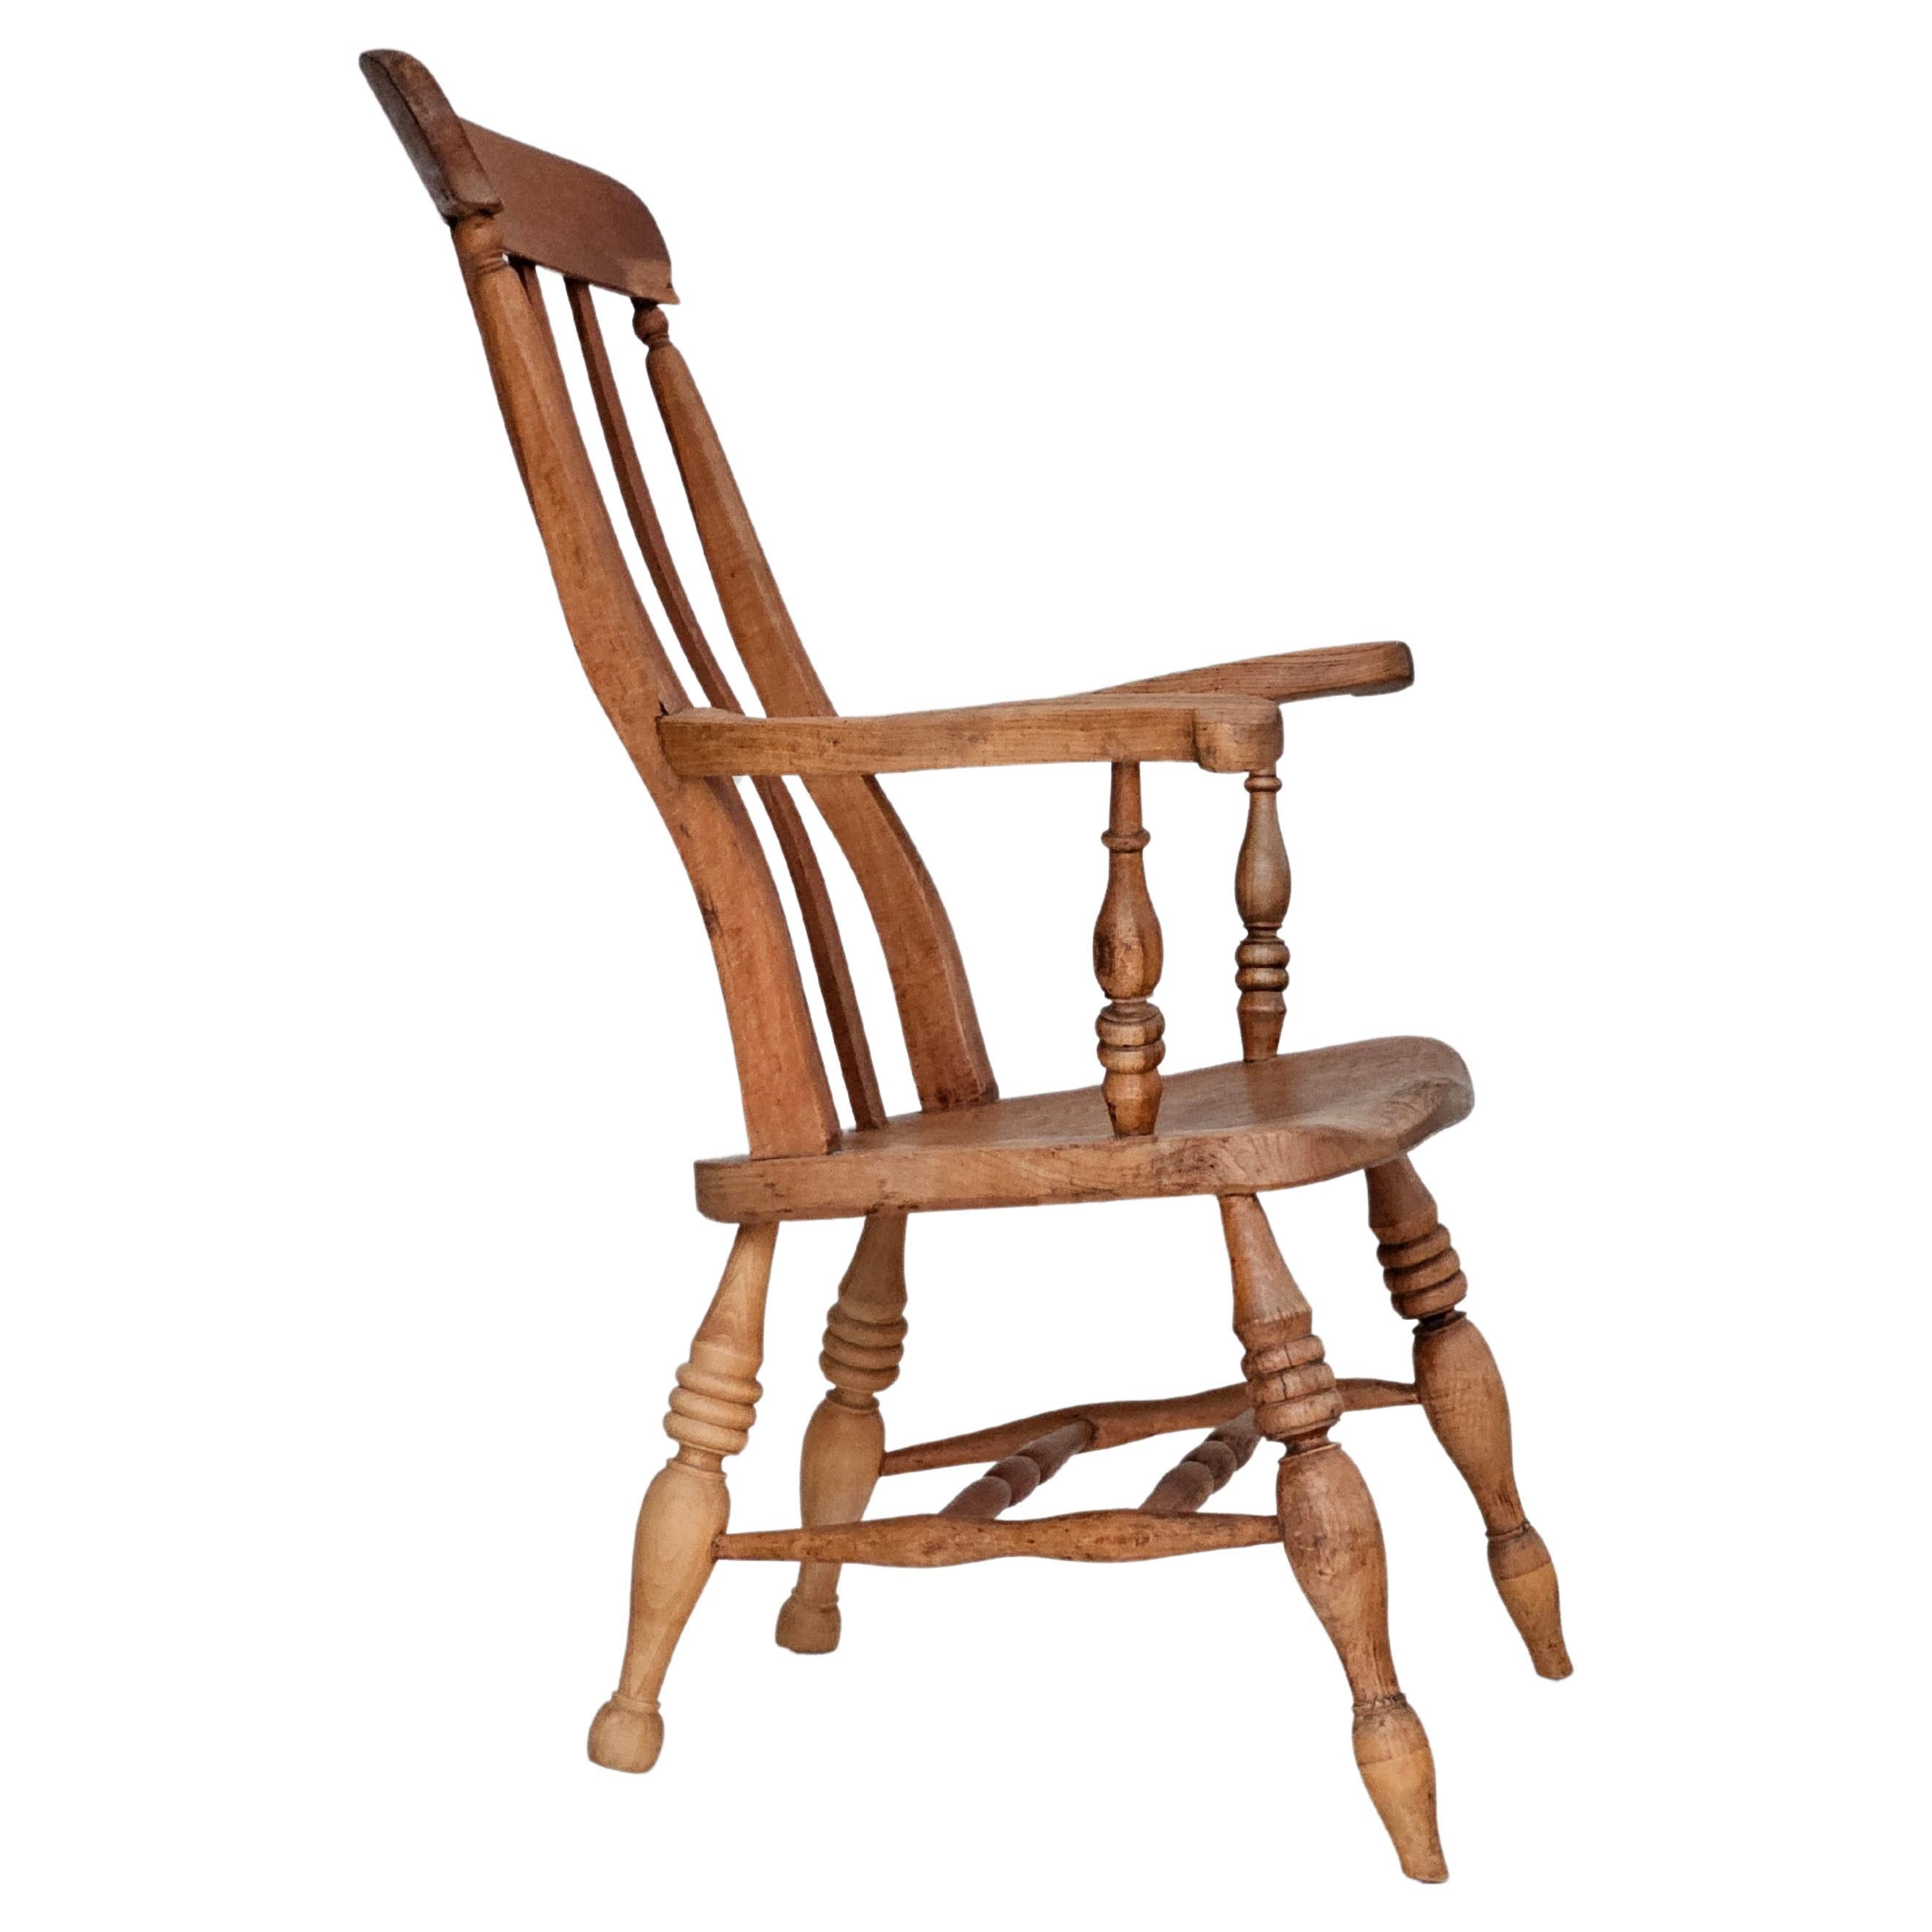 1950s, Scandinavian design, wood armchair, ash wood, oak wood.